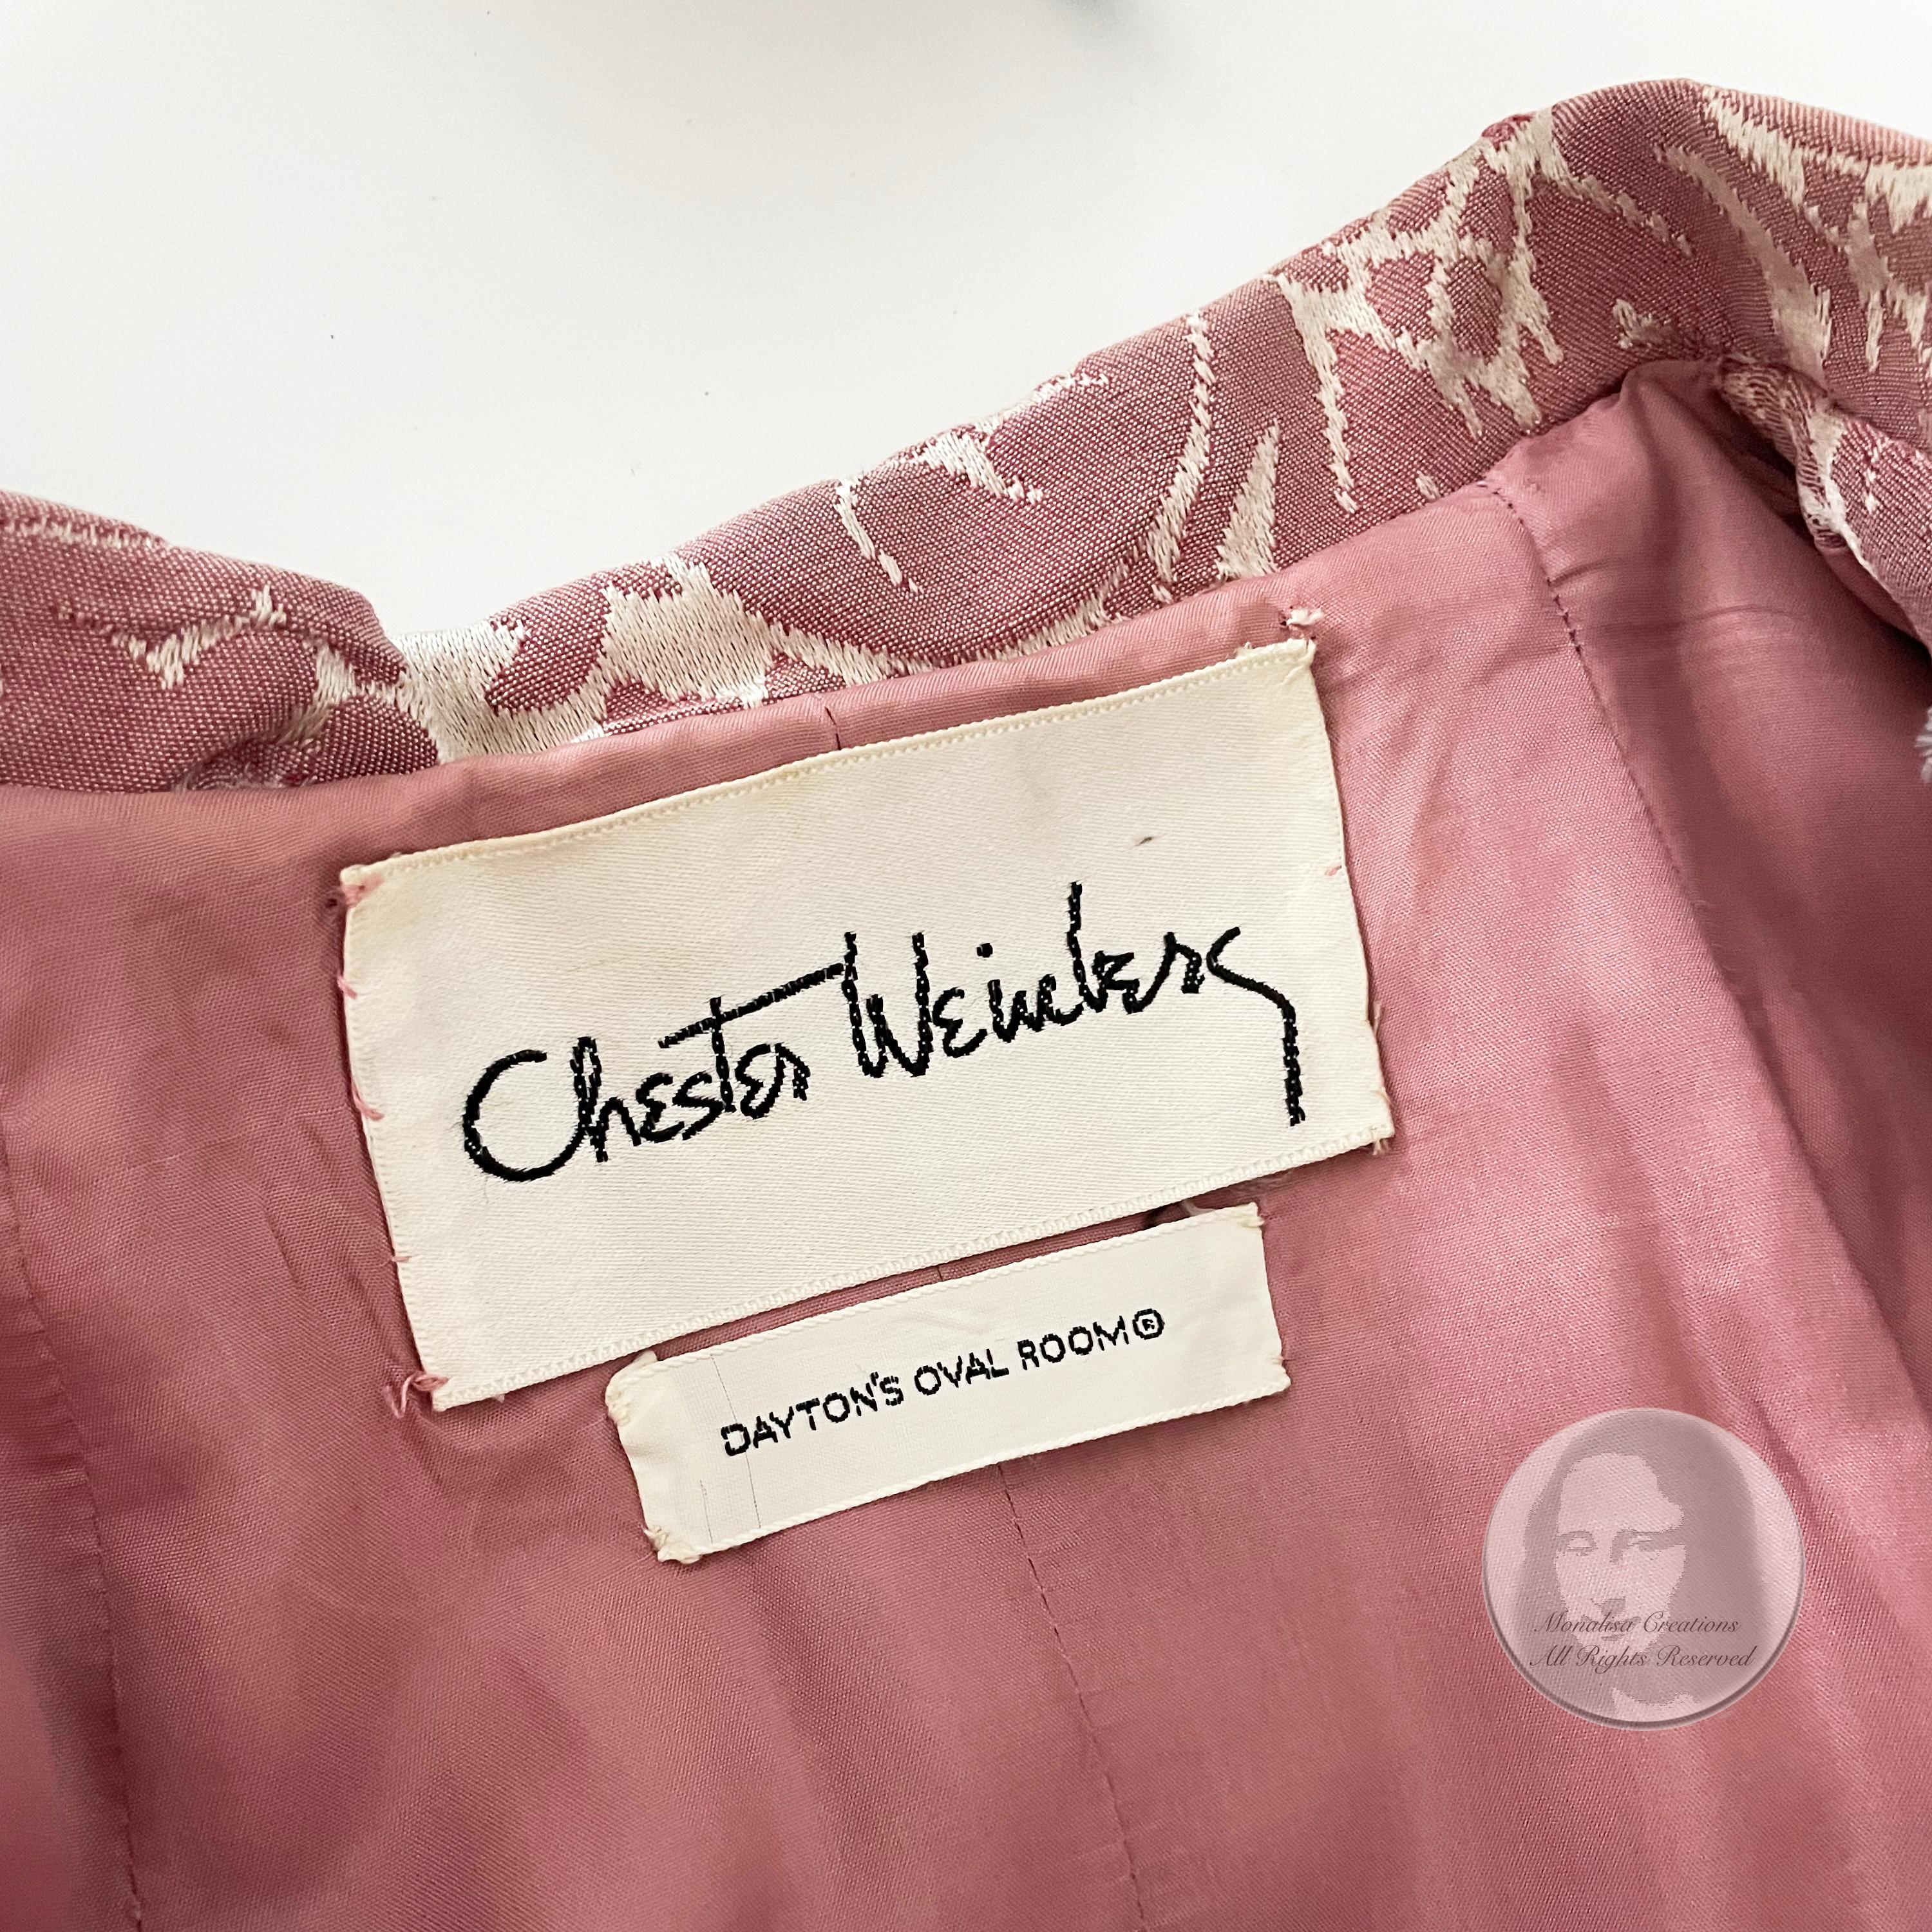 Women's Chester Weinberg Dress Damask Pink Florals Oval Room Dayton's 60s Vintage Rare 